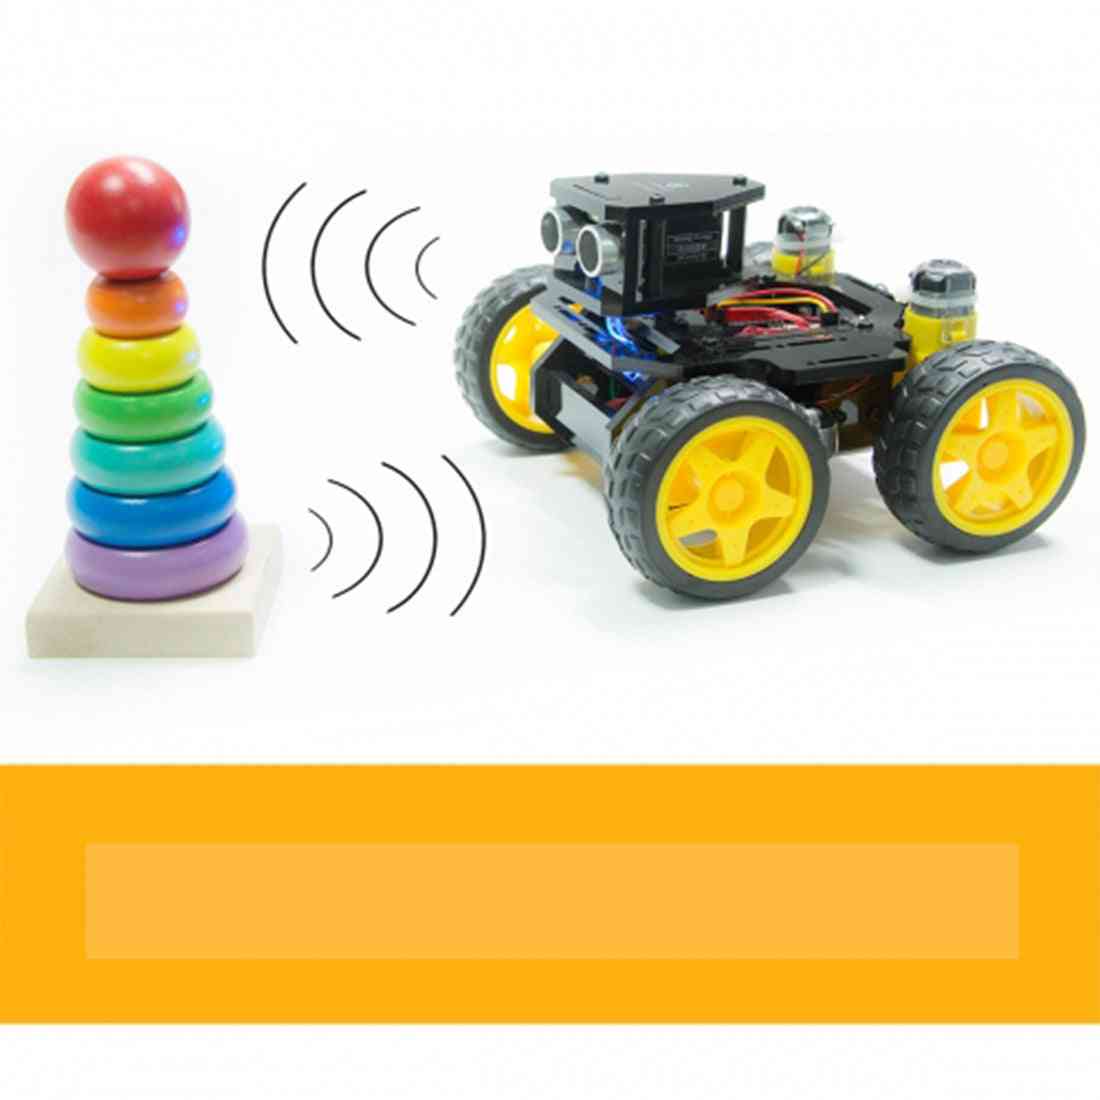 Kit per auto robot wifi intelligente